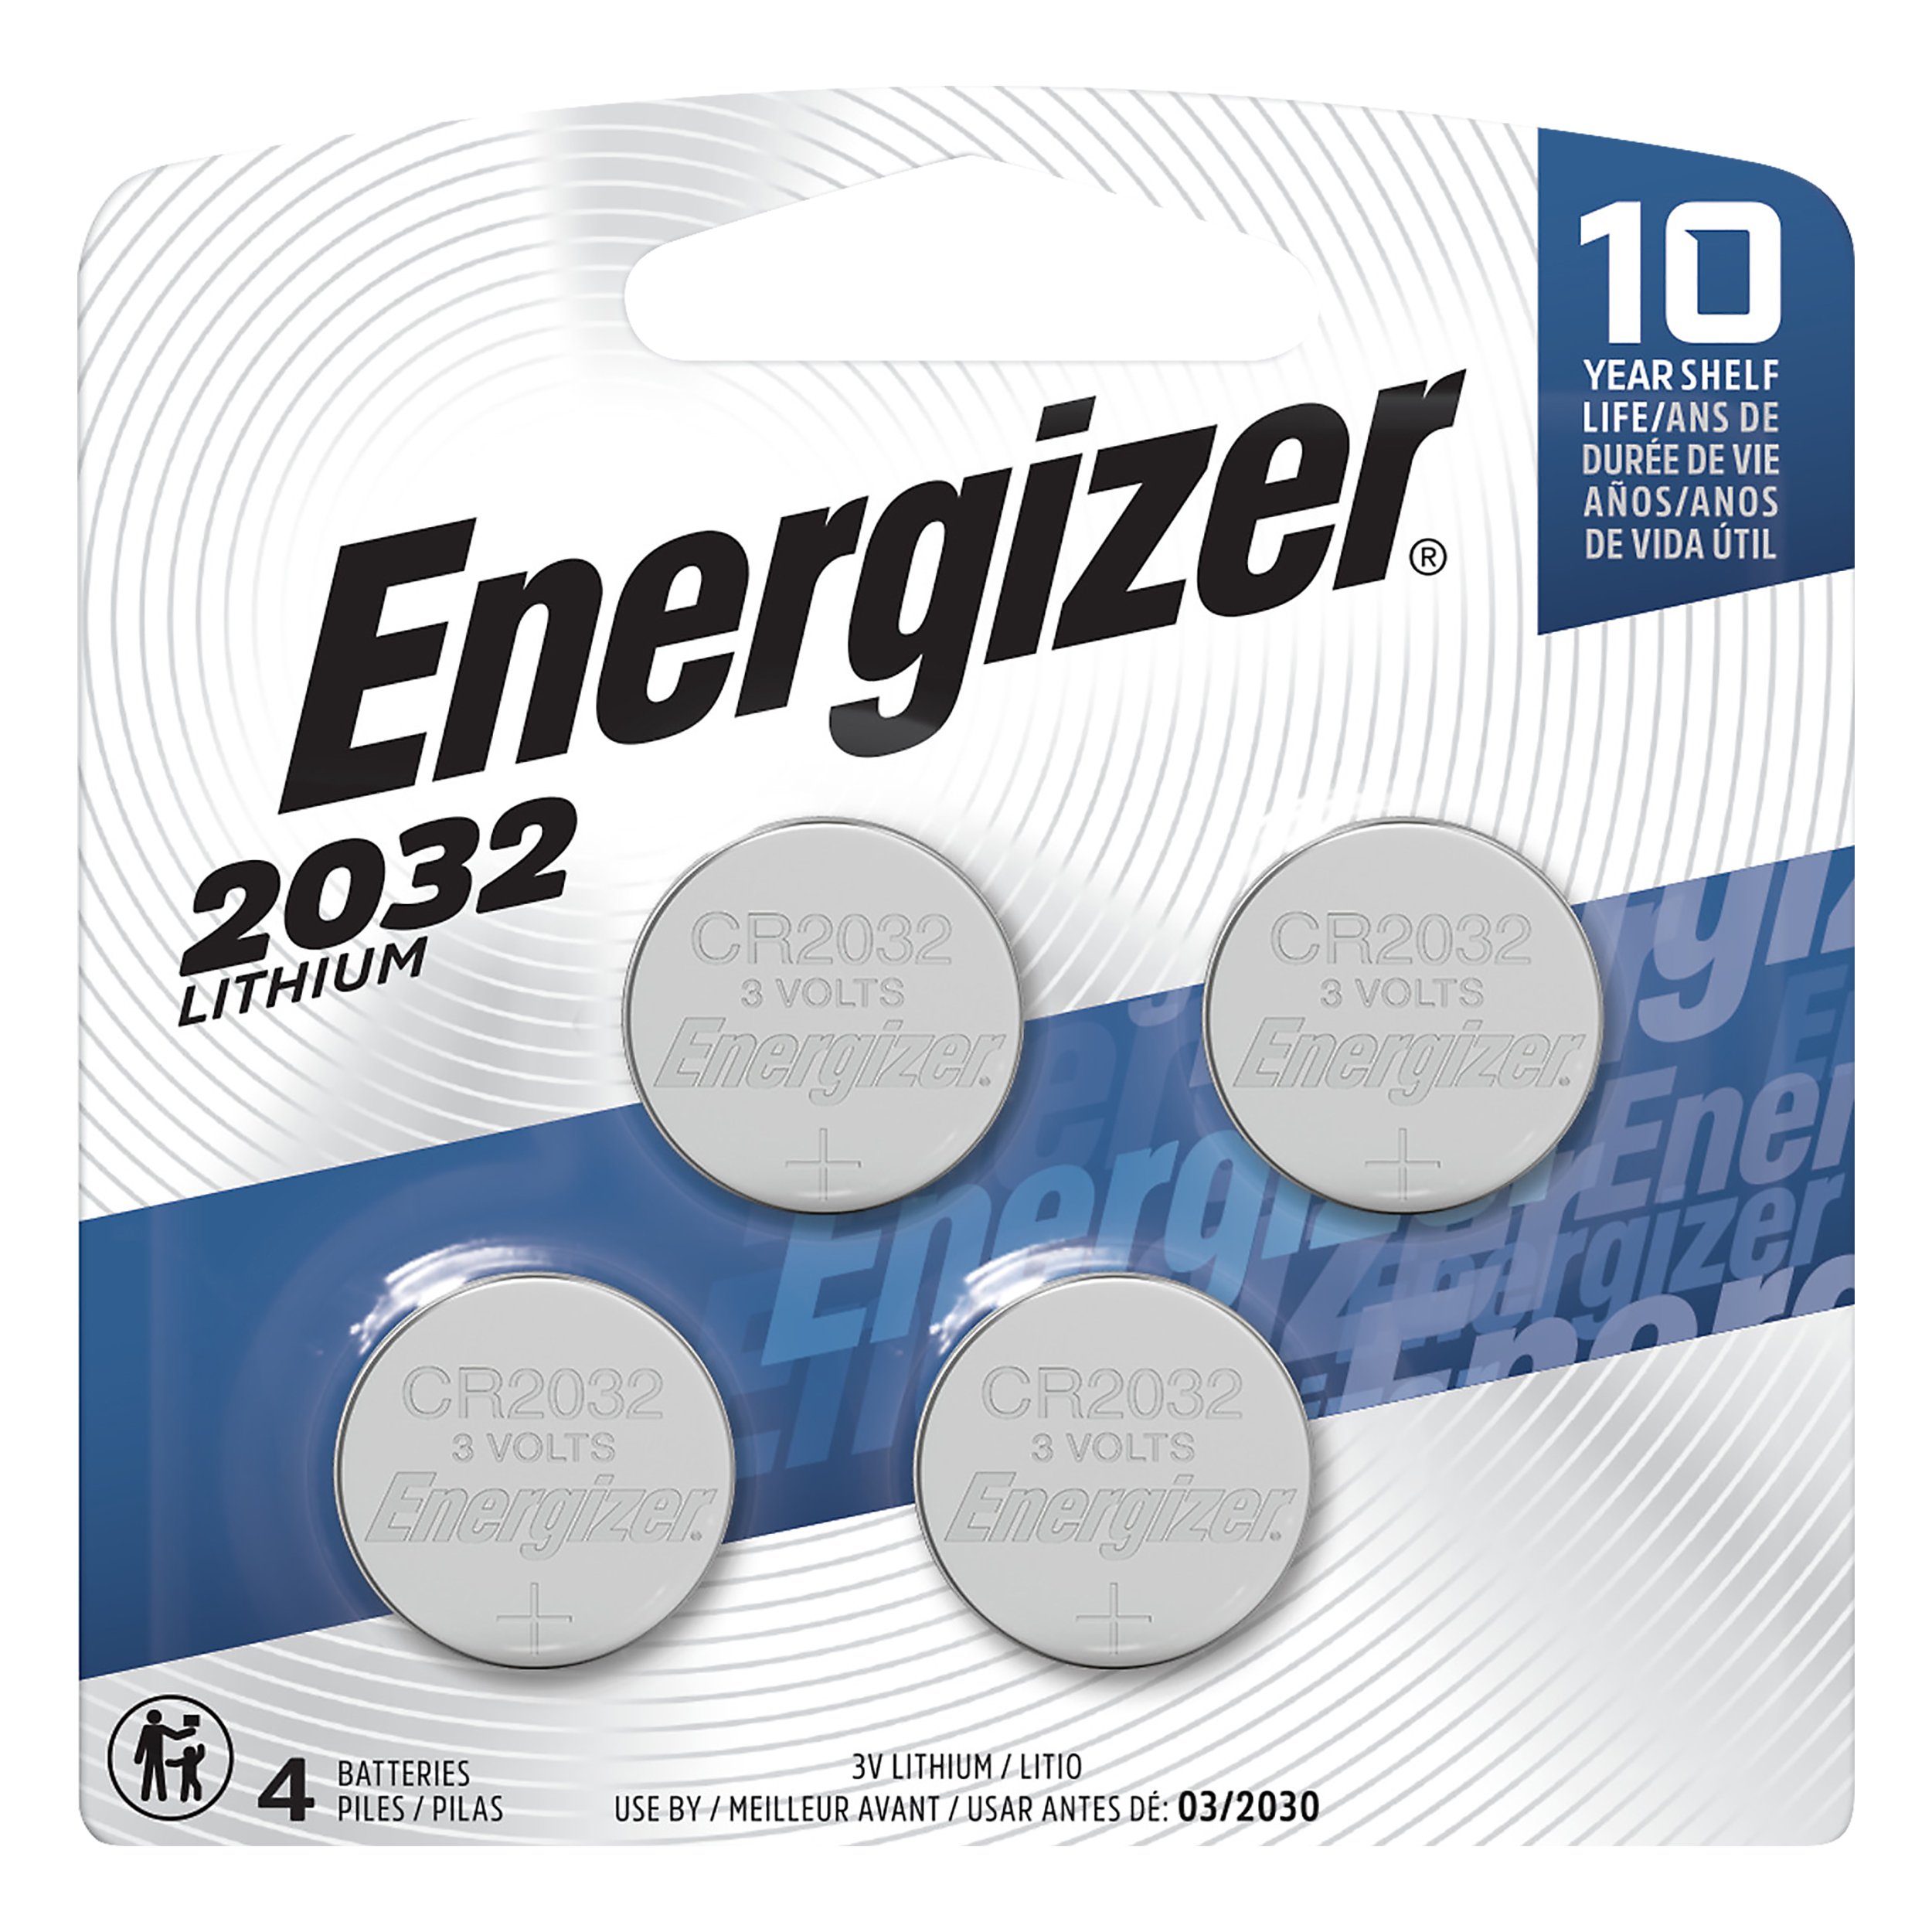 Split Overvloedig ik ben ziek Energizer 2032 Lithium Coin Batteries - Shop Batteries at H-E-B